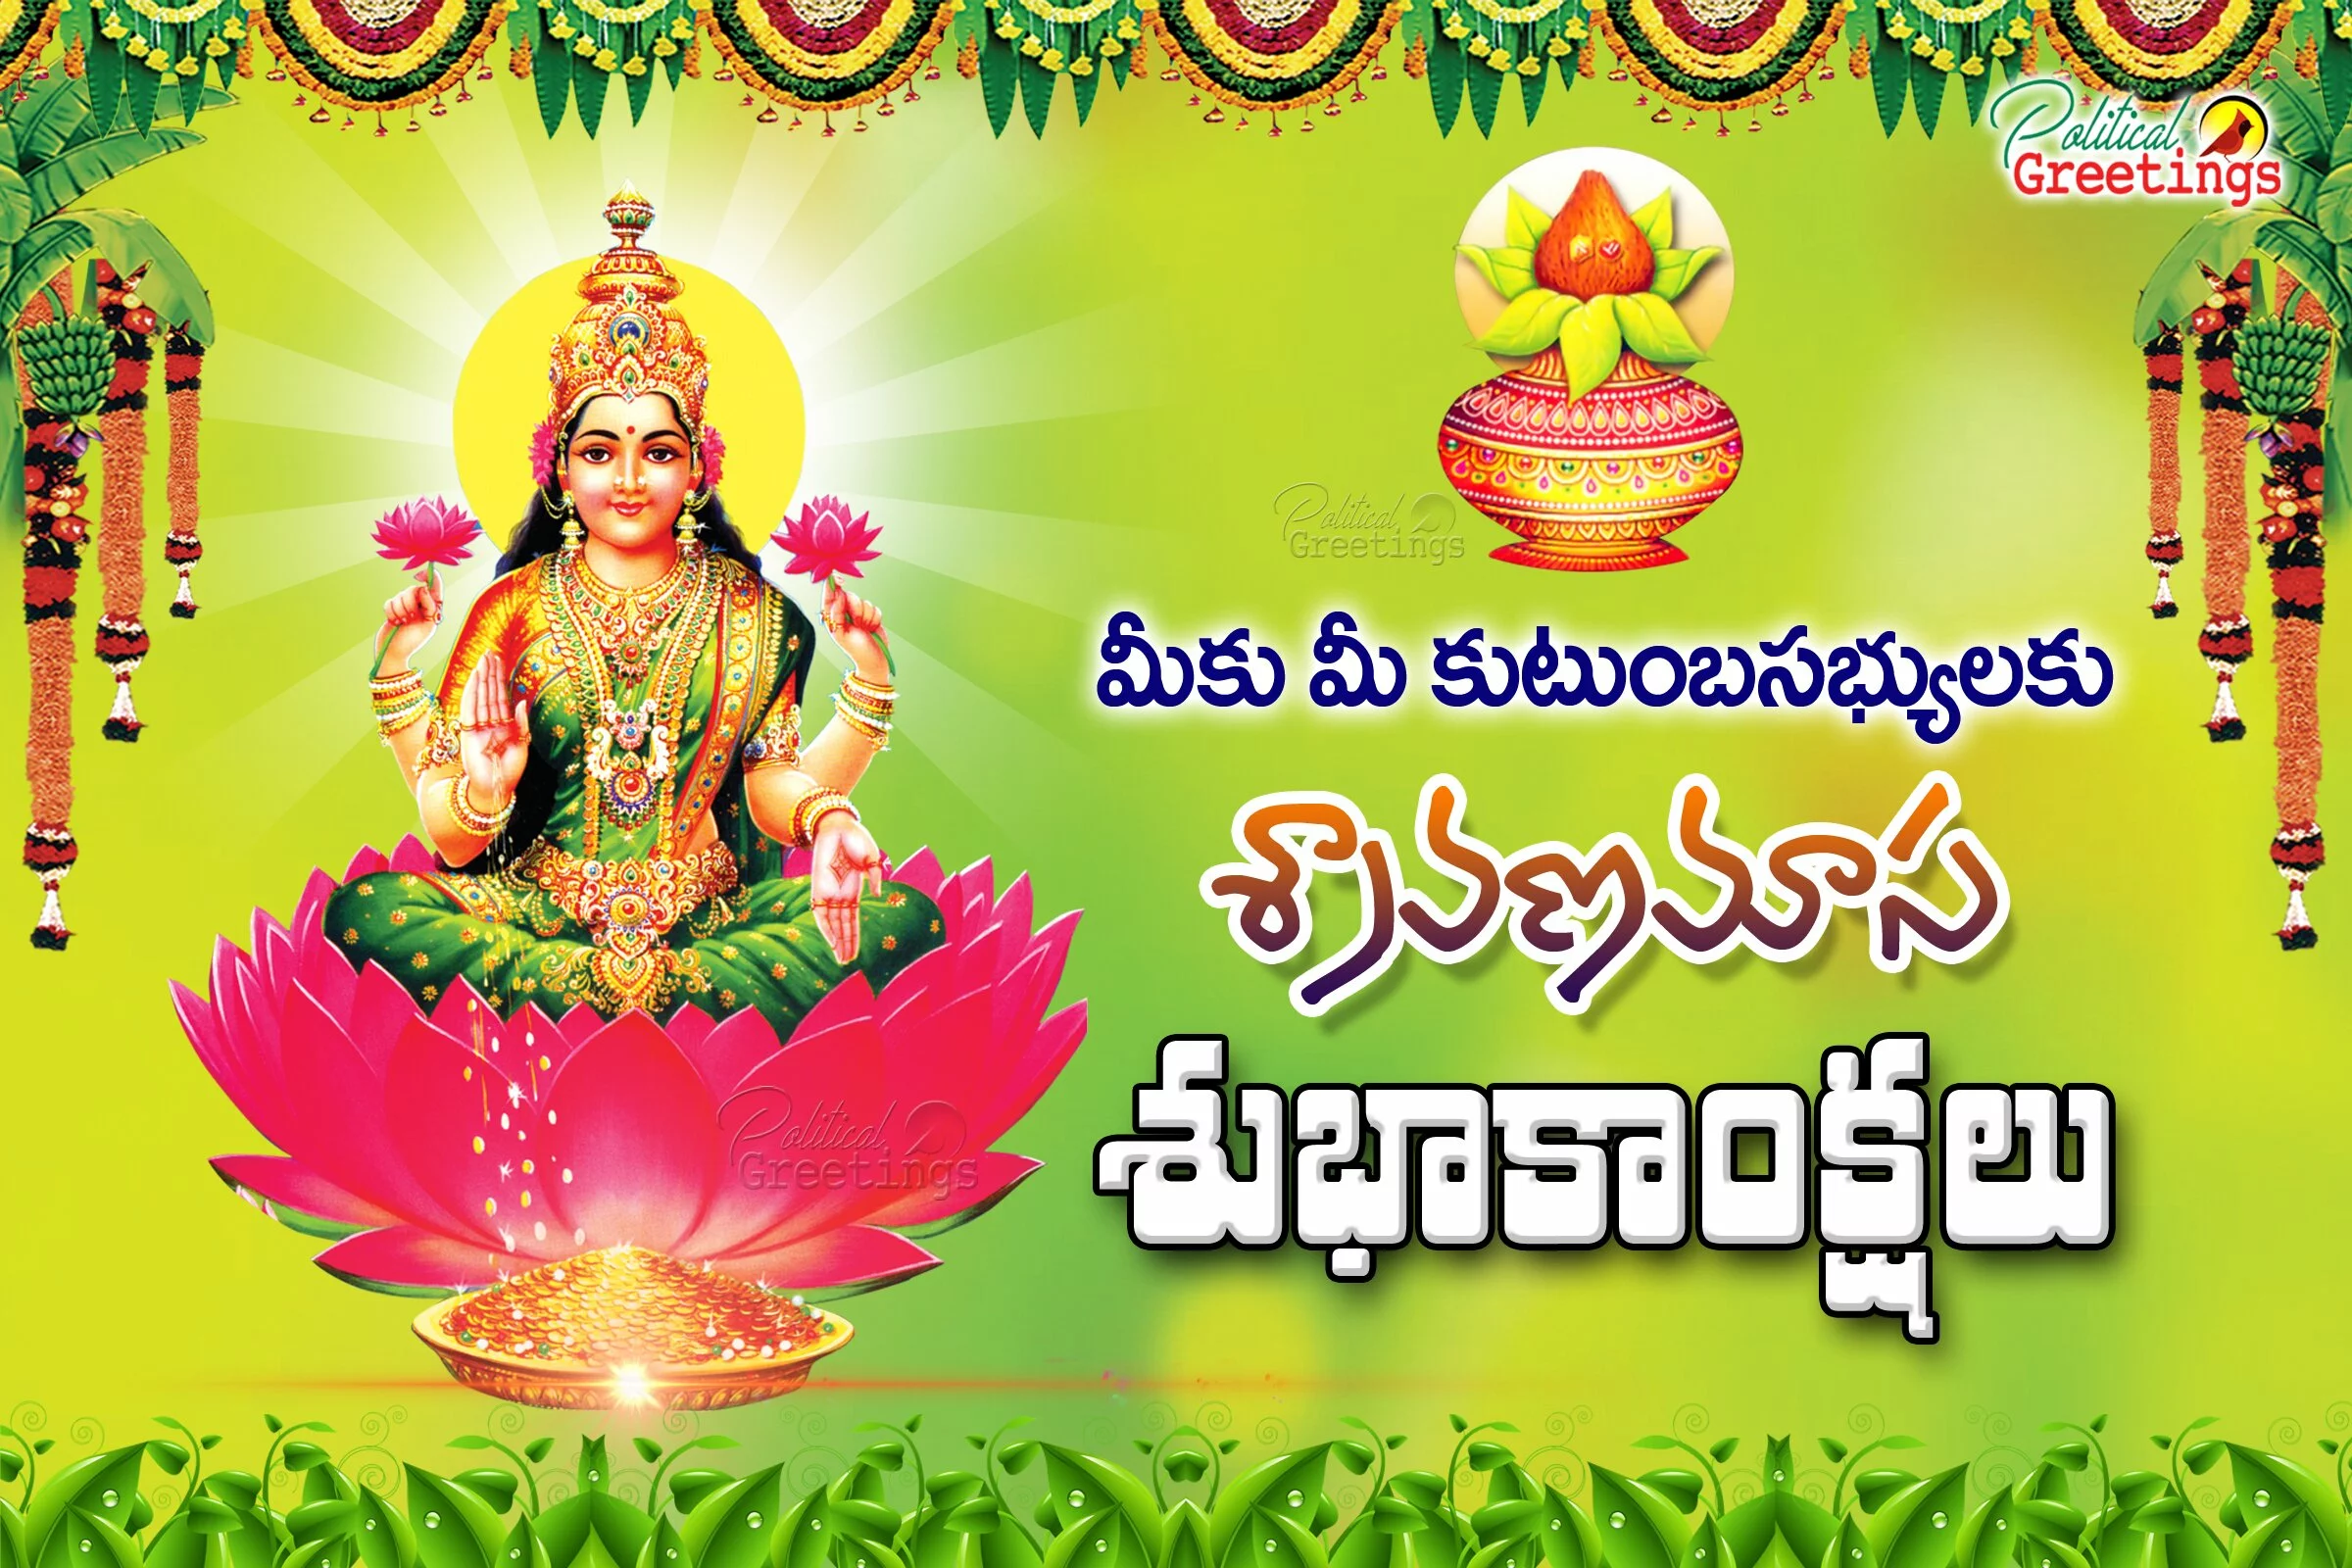 sravana-masam-telugu-wishes-and-greetings-with-god-laxmi-hd-wallpapers11